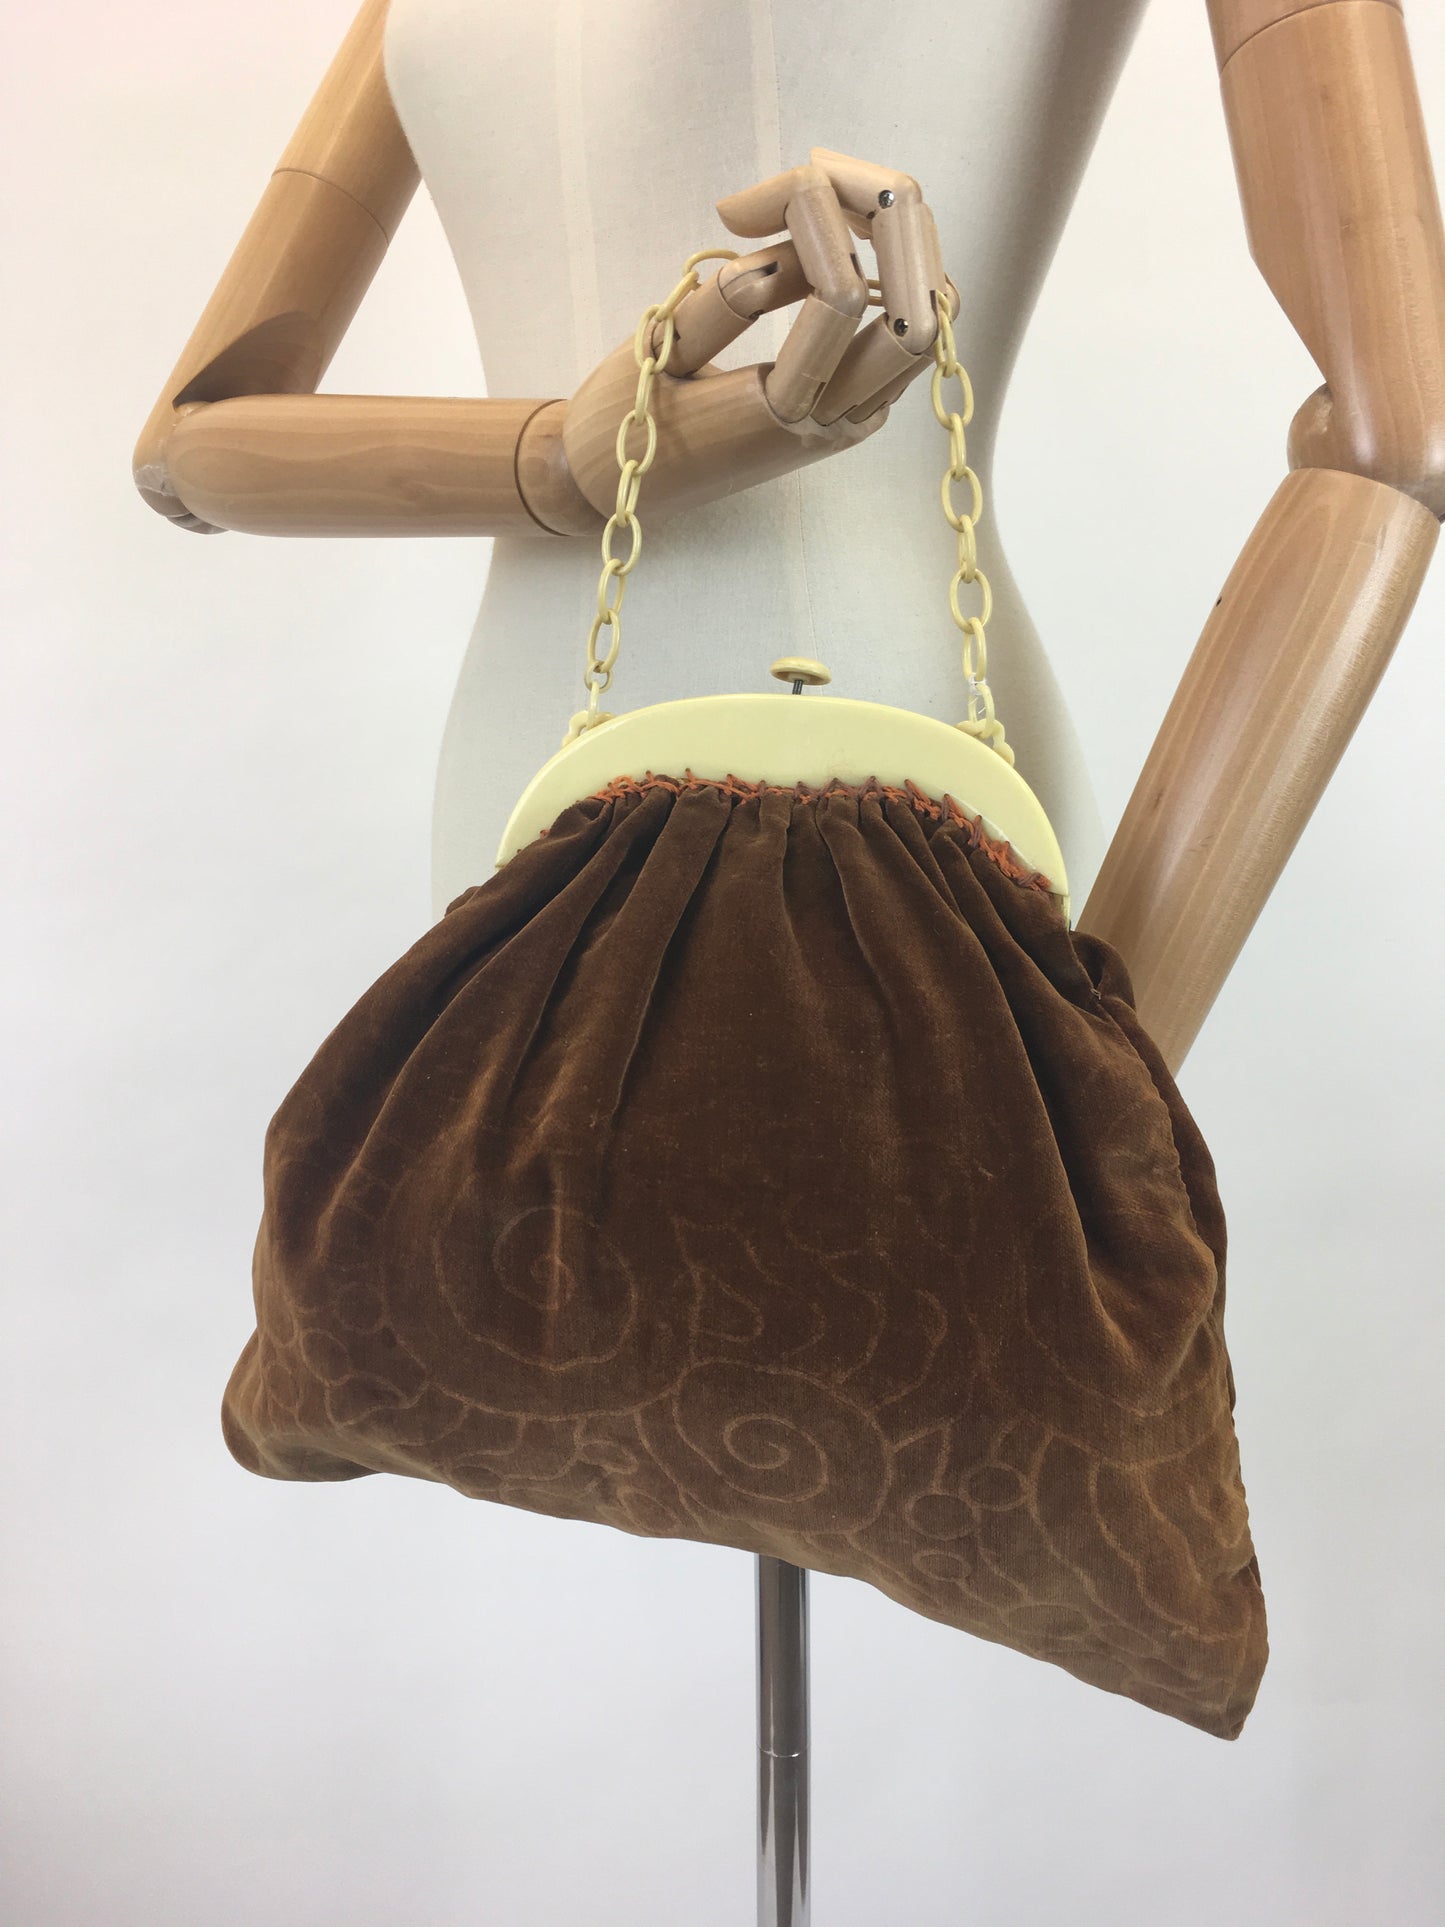 Original Late 1920's Early 1930's Stunning Velvet Handbag - In Warm Golden Brown